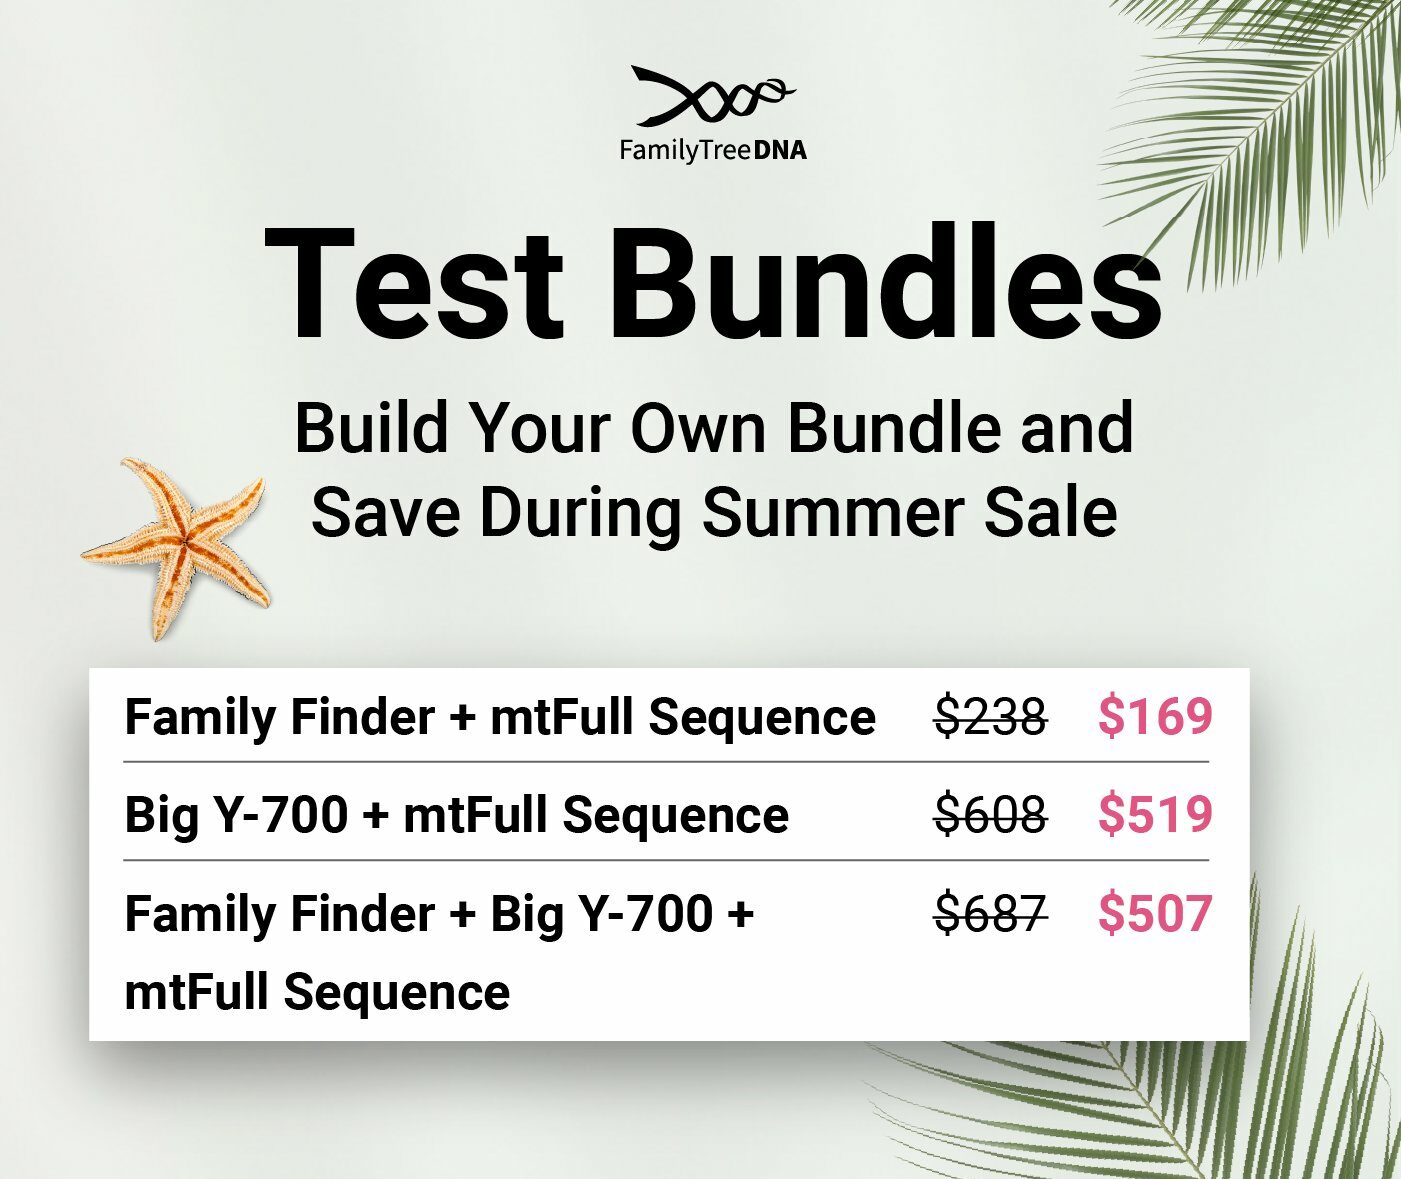 EXTENDED FamilyTreeDNA Summer Sale: Bundles